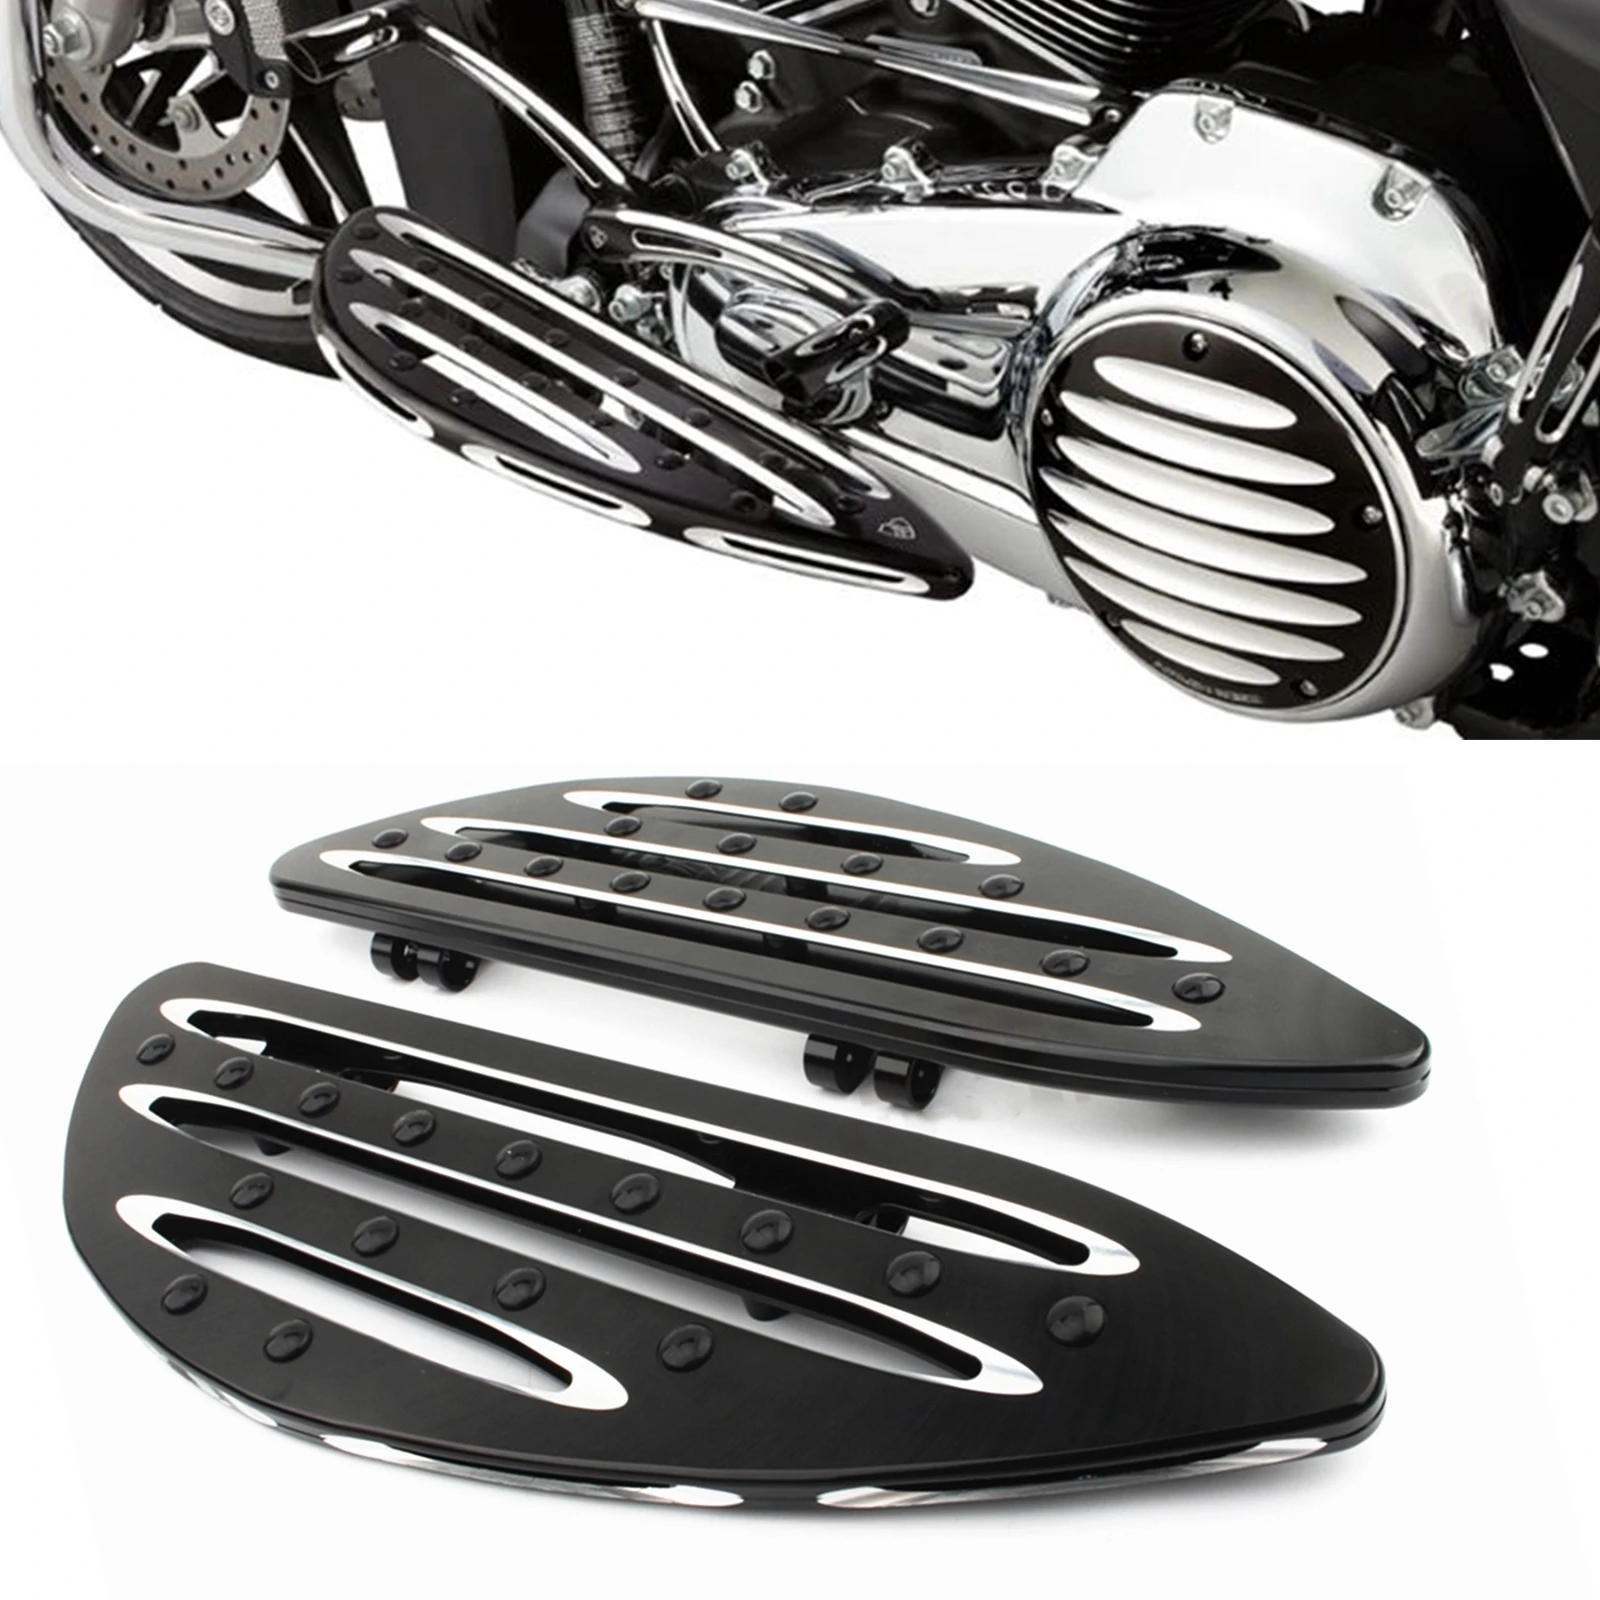 

For Harley Glide/Street Glide/Supreme Glide/Road King Motorcycle Front Stretched Footrest Pedal Kit